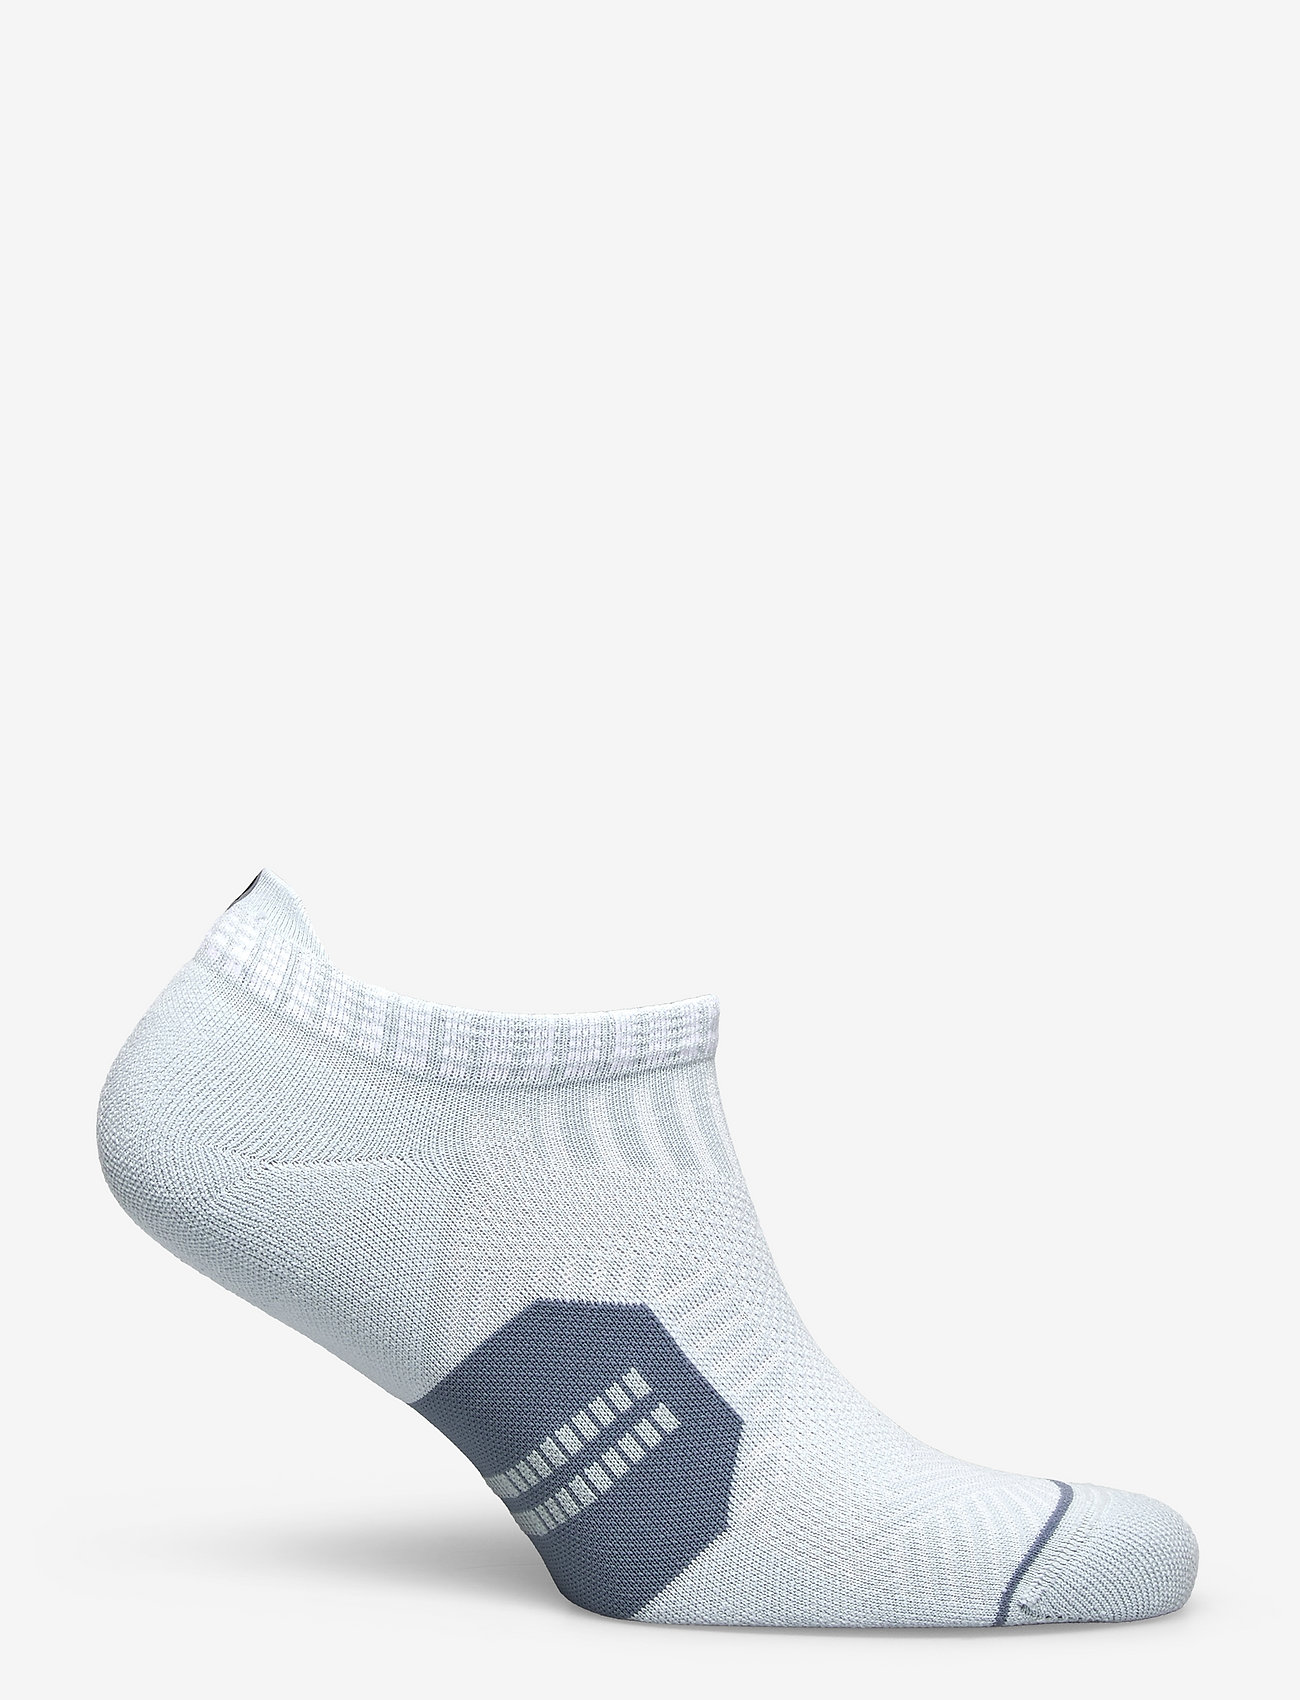 Rockay - Accelerate Performance Socks - white/blue - 1